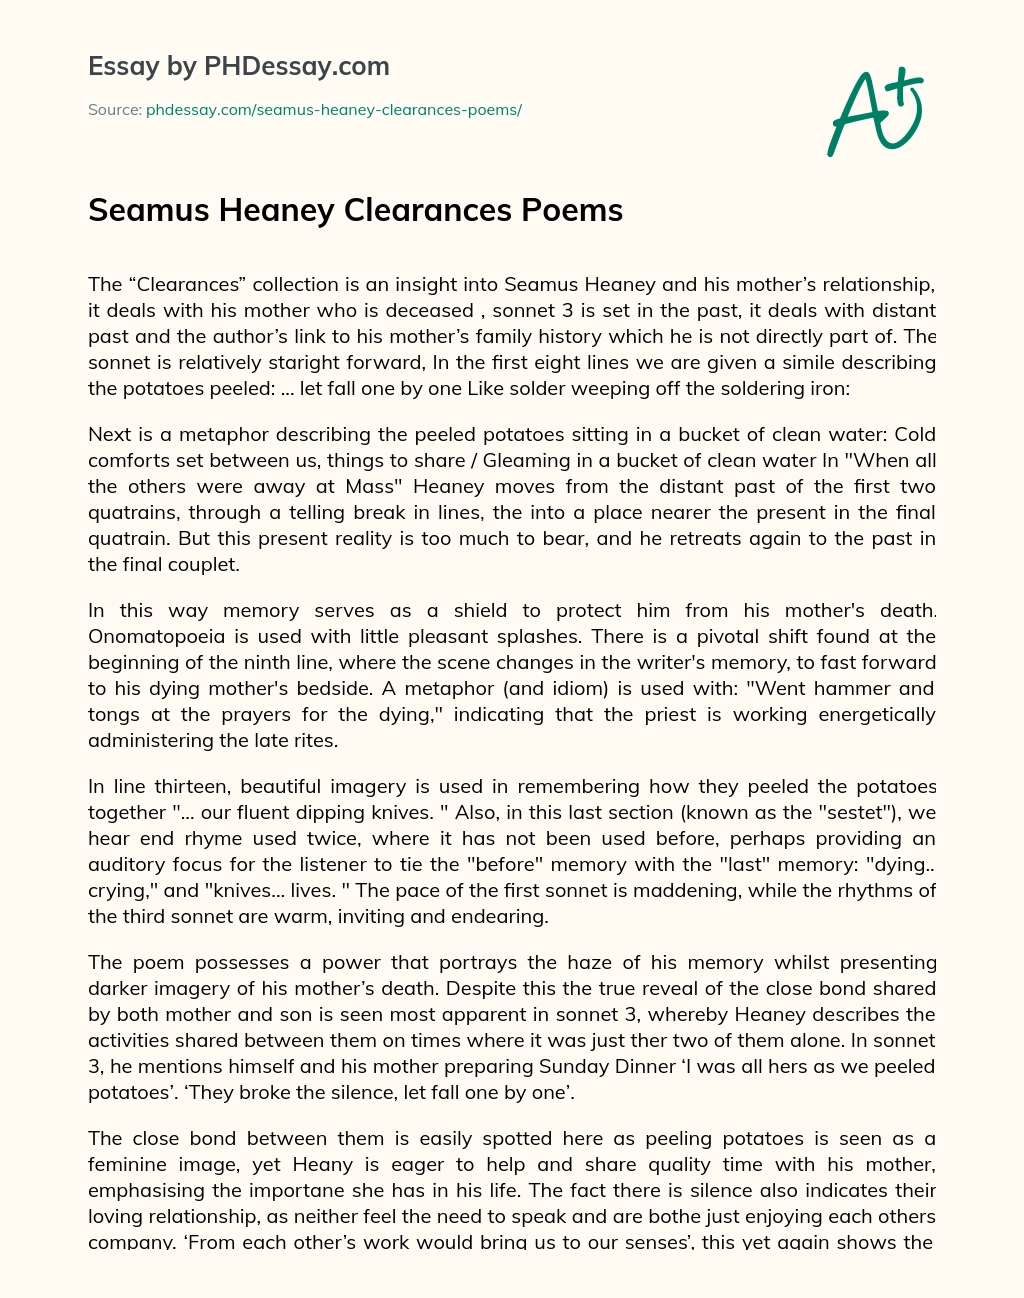 Seamus Heaney Clearances Poems essay